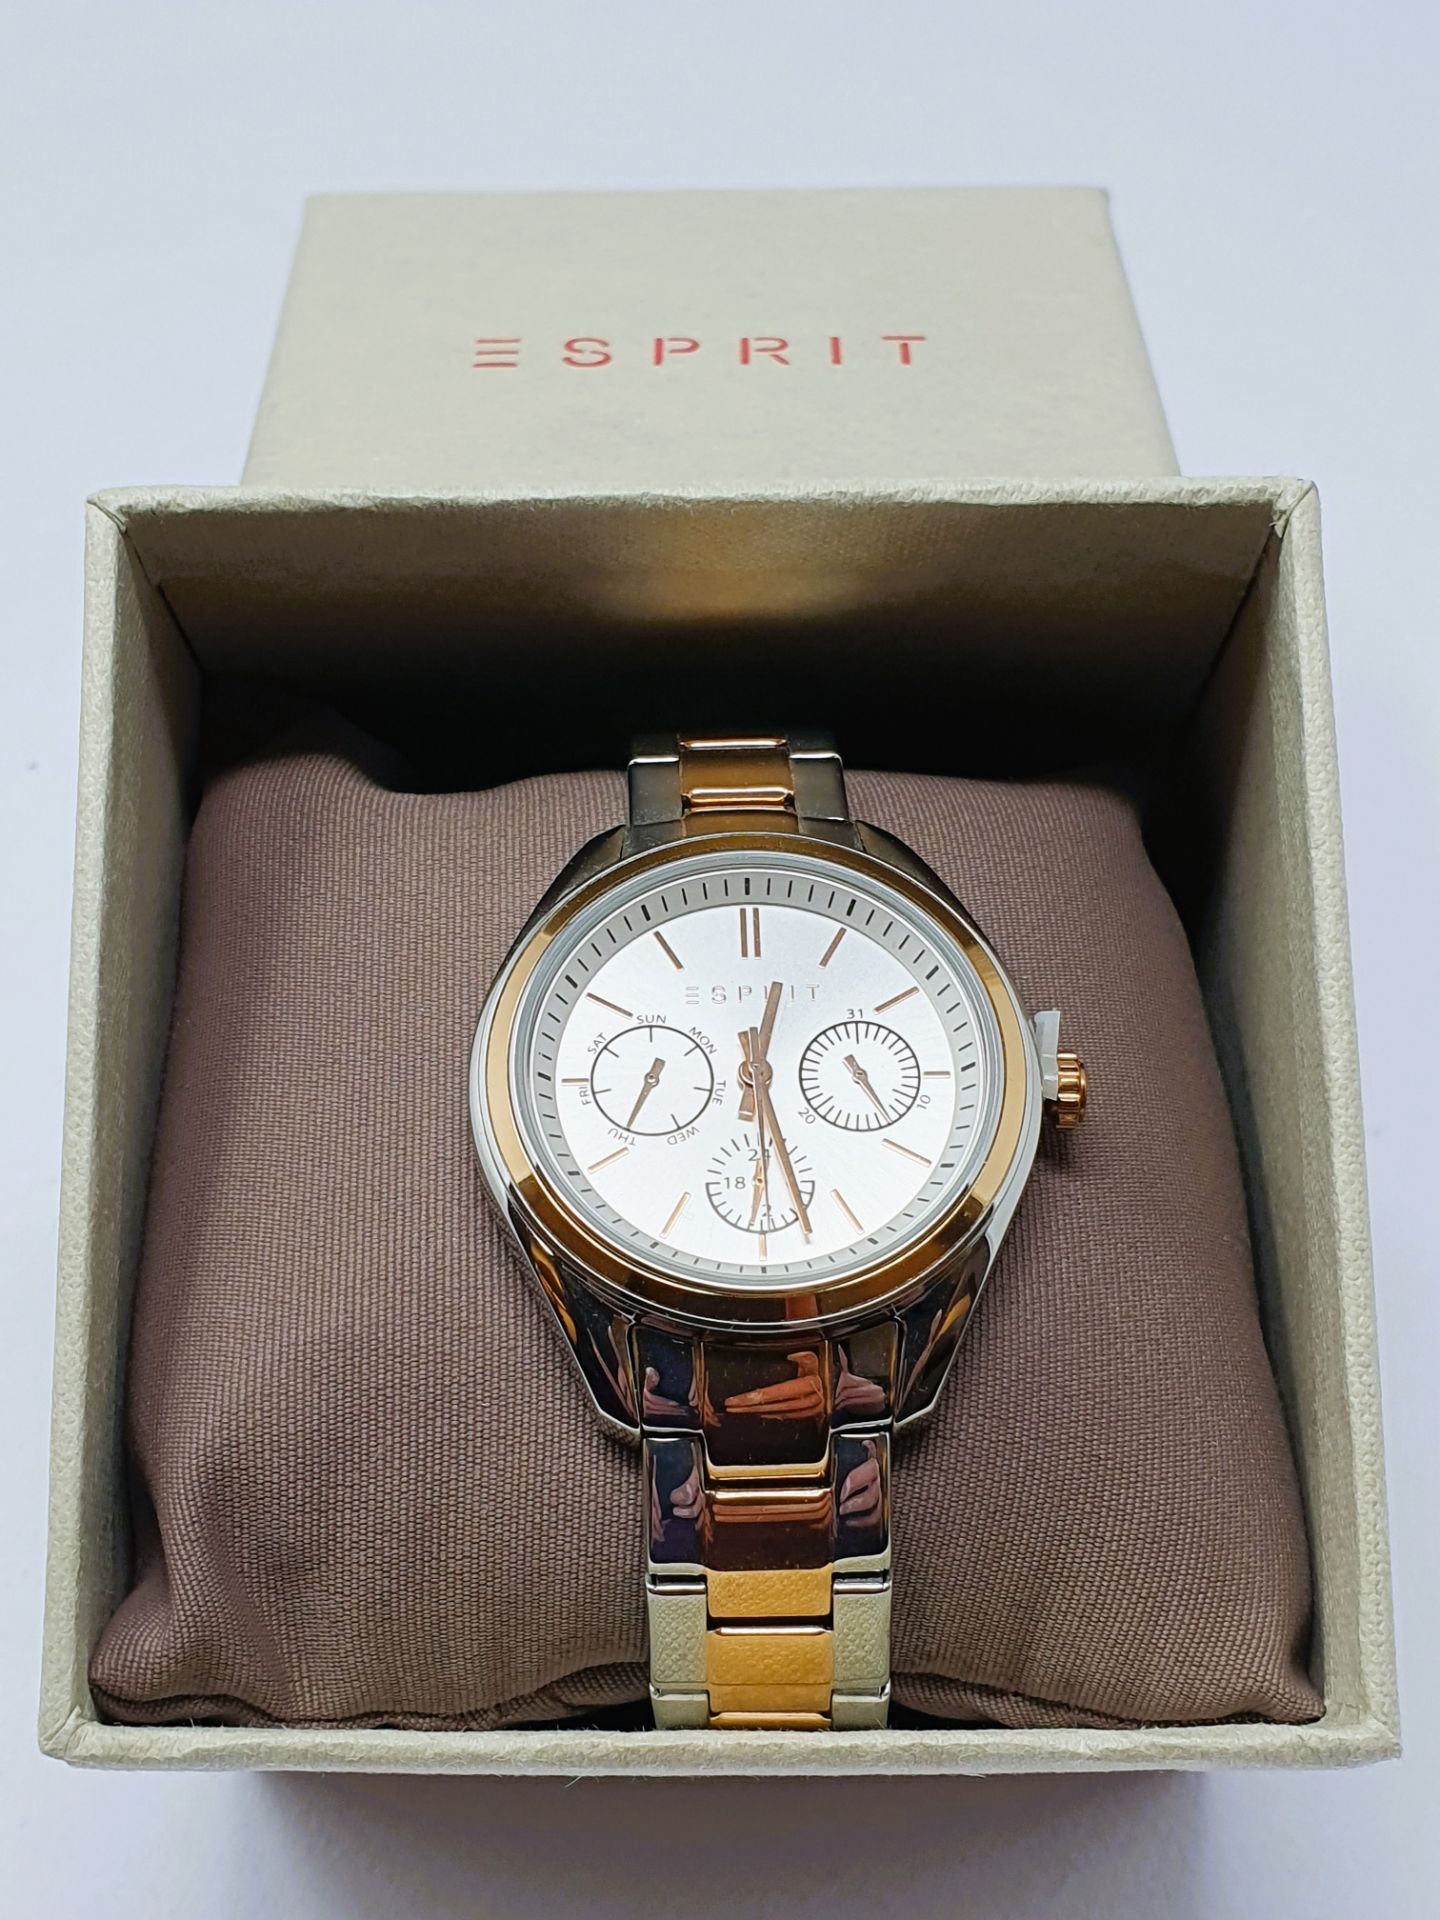 Two Esprit wristwatches,